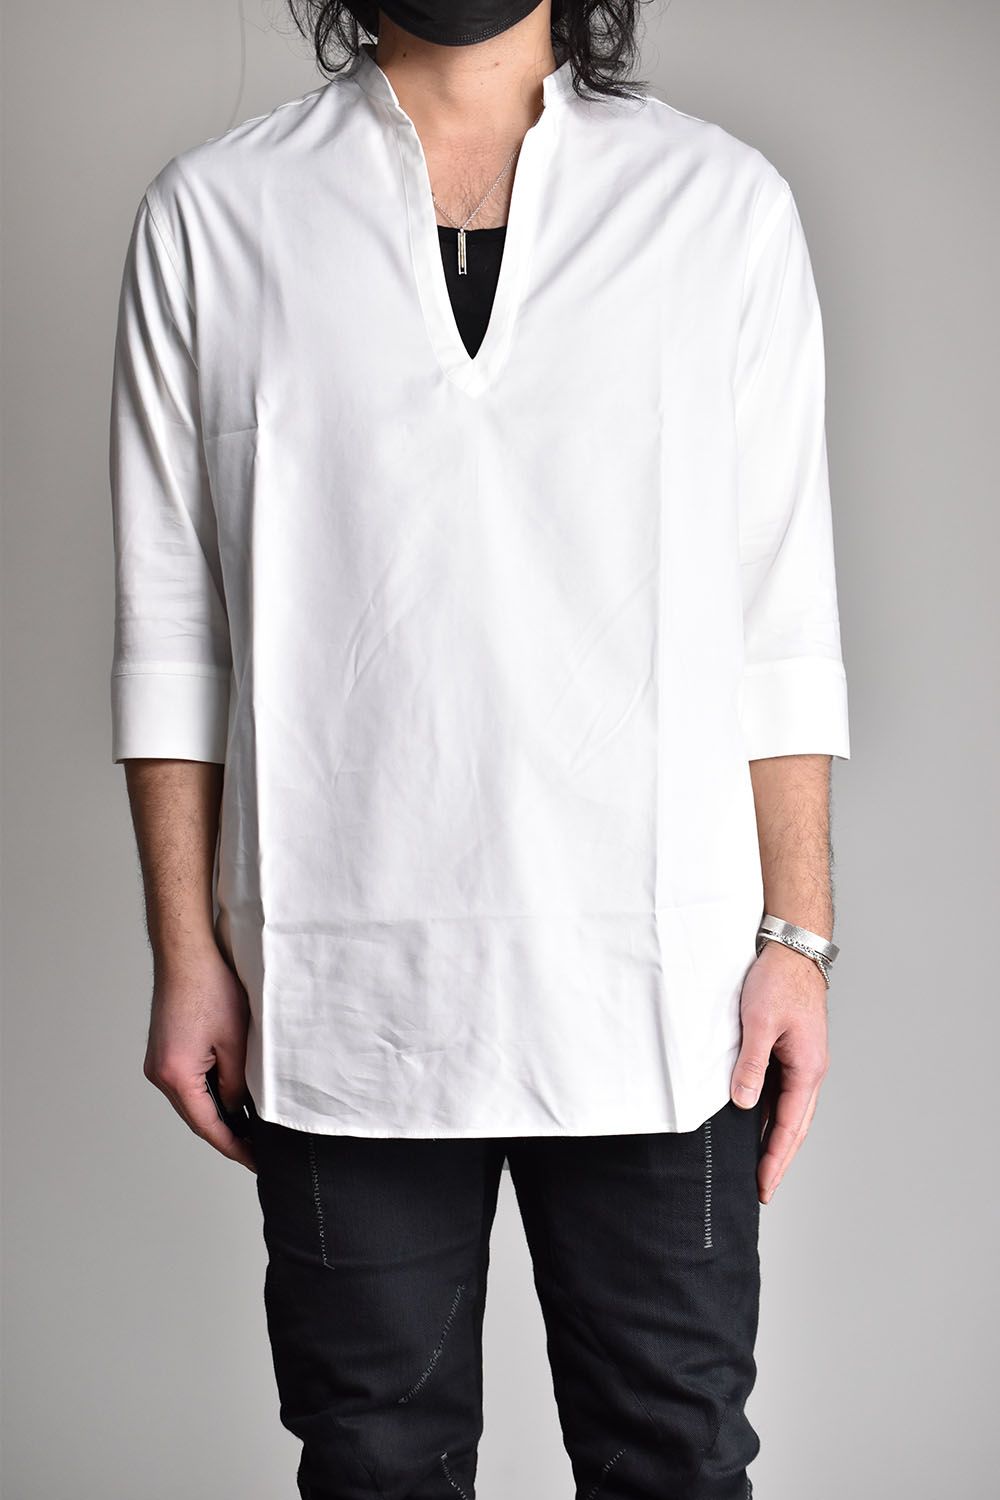 Cotton Rayon Sapphire Cool Skipper Shirts"White"/コットンレーヨンサファイアクールスキッパーシャツ"ホワイト"